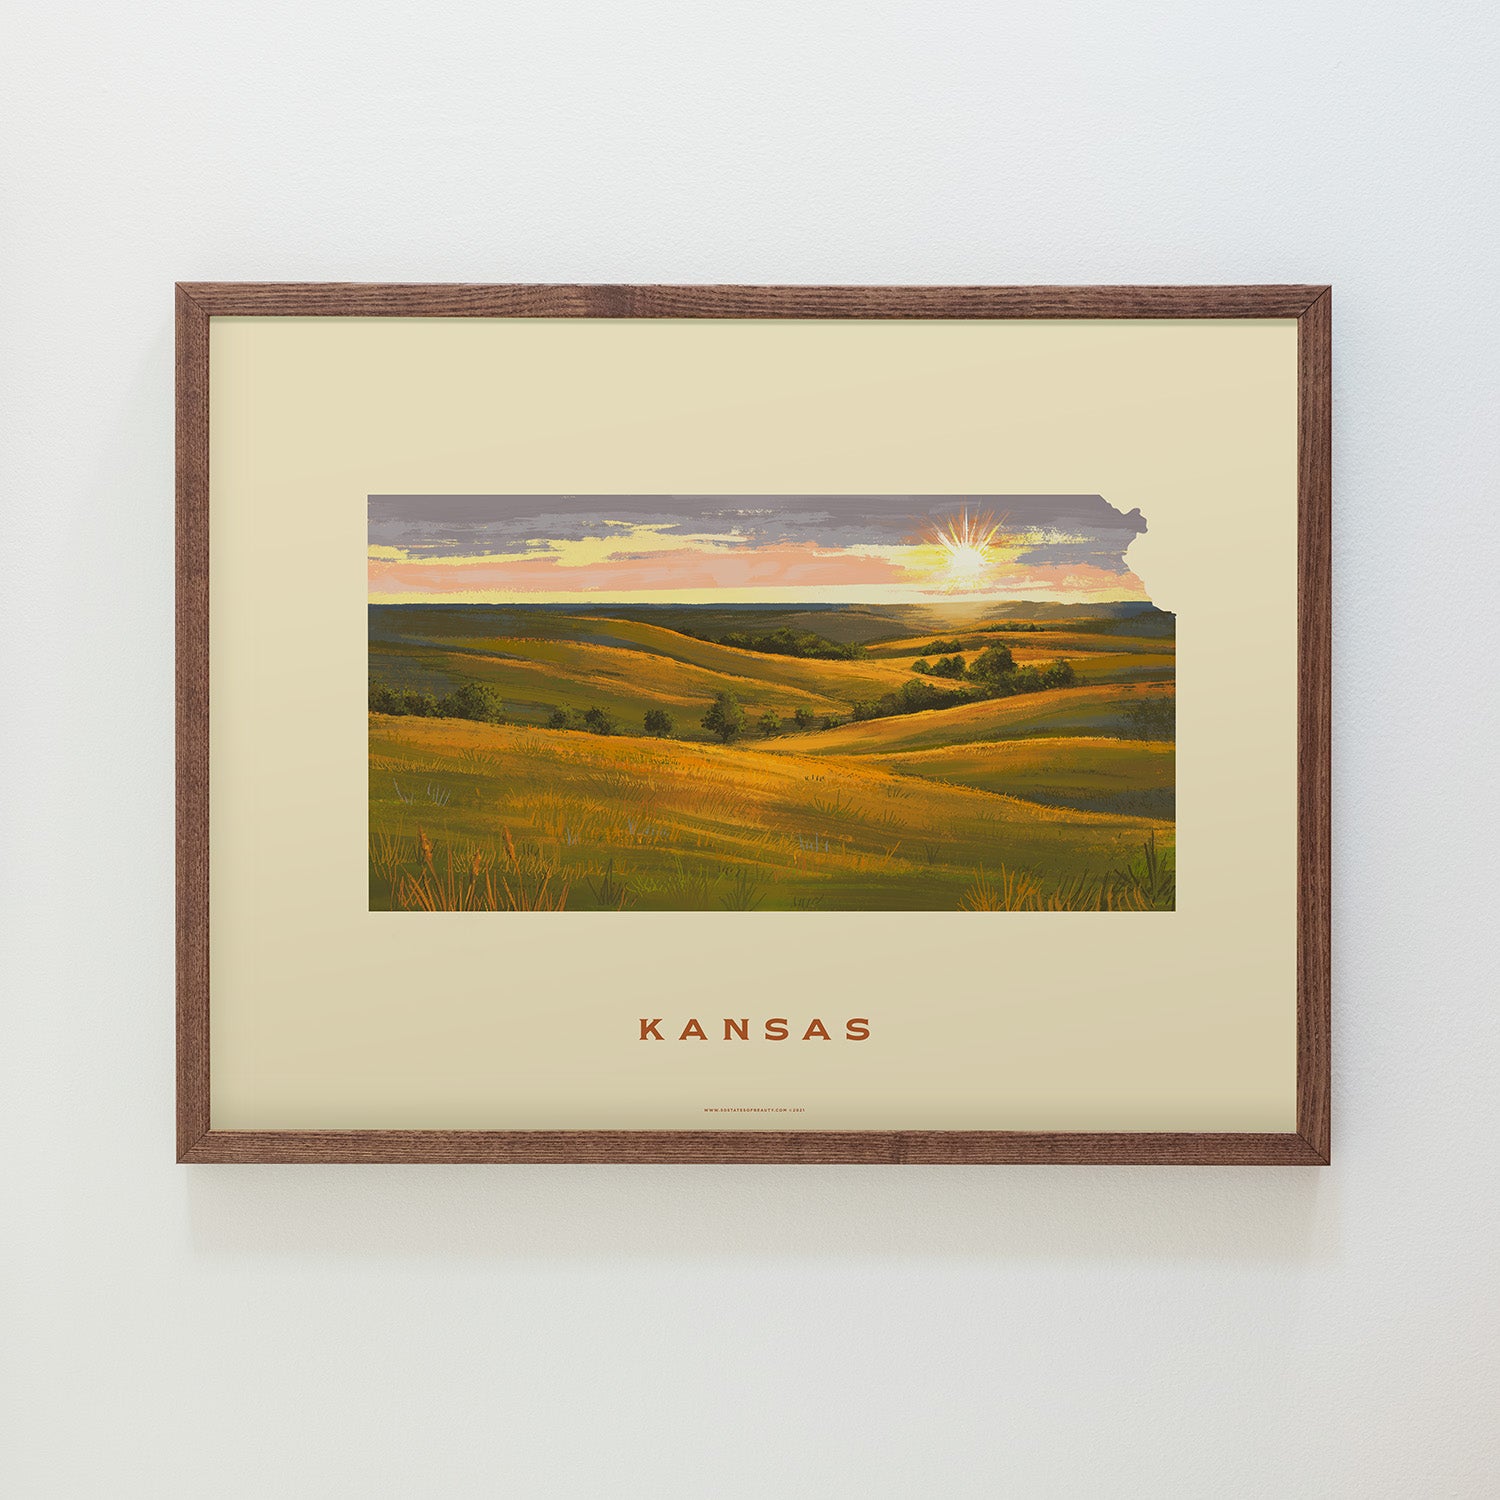 Reflections of Kansas: A Prairie Postcard Album, 1900-1930 by Wood